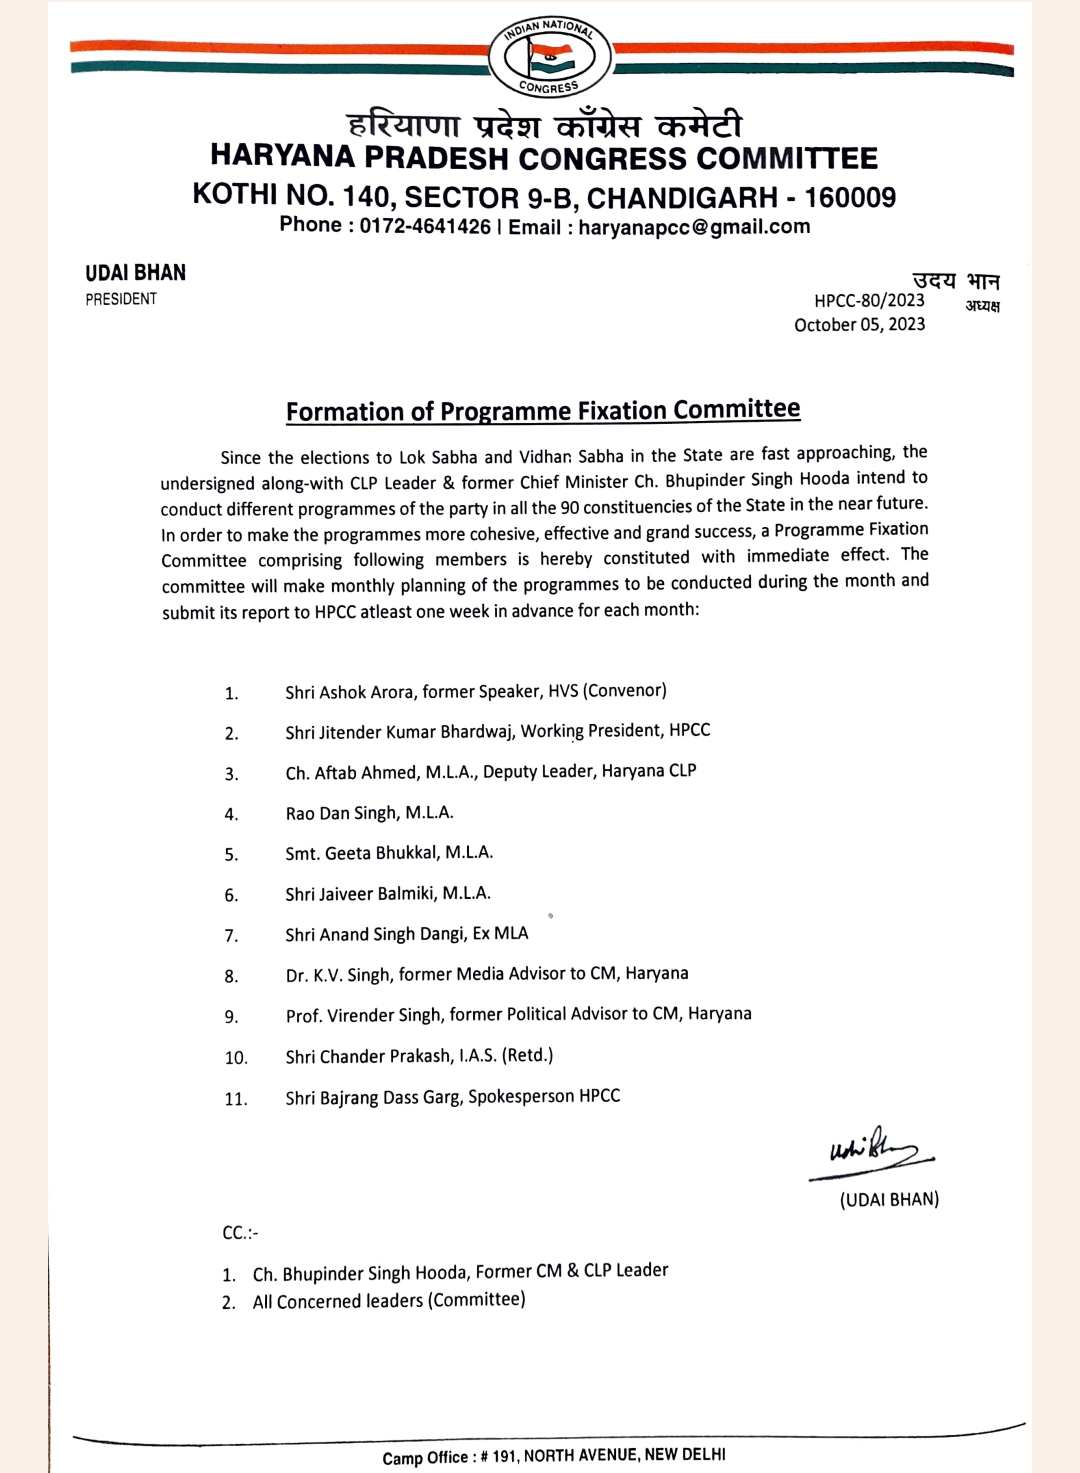 Haryana Congress President formed 11 members committee